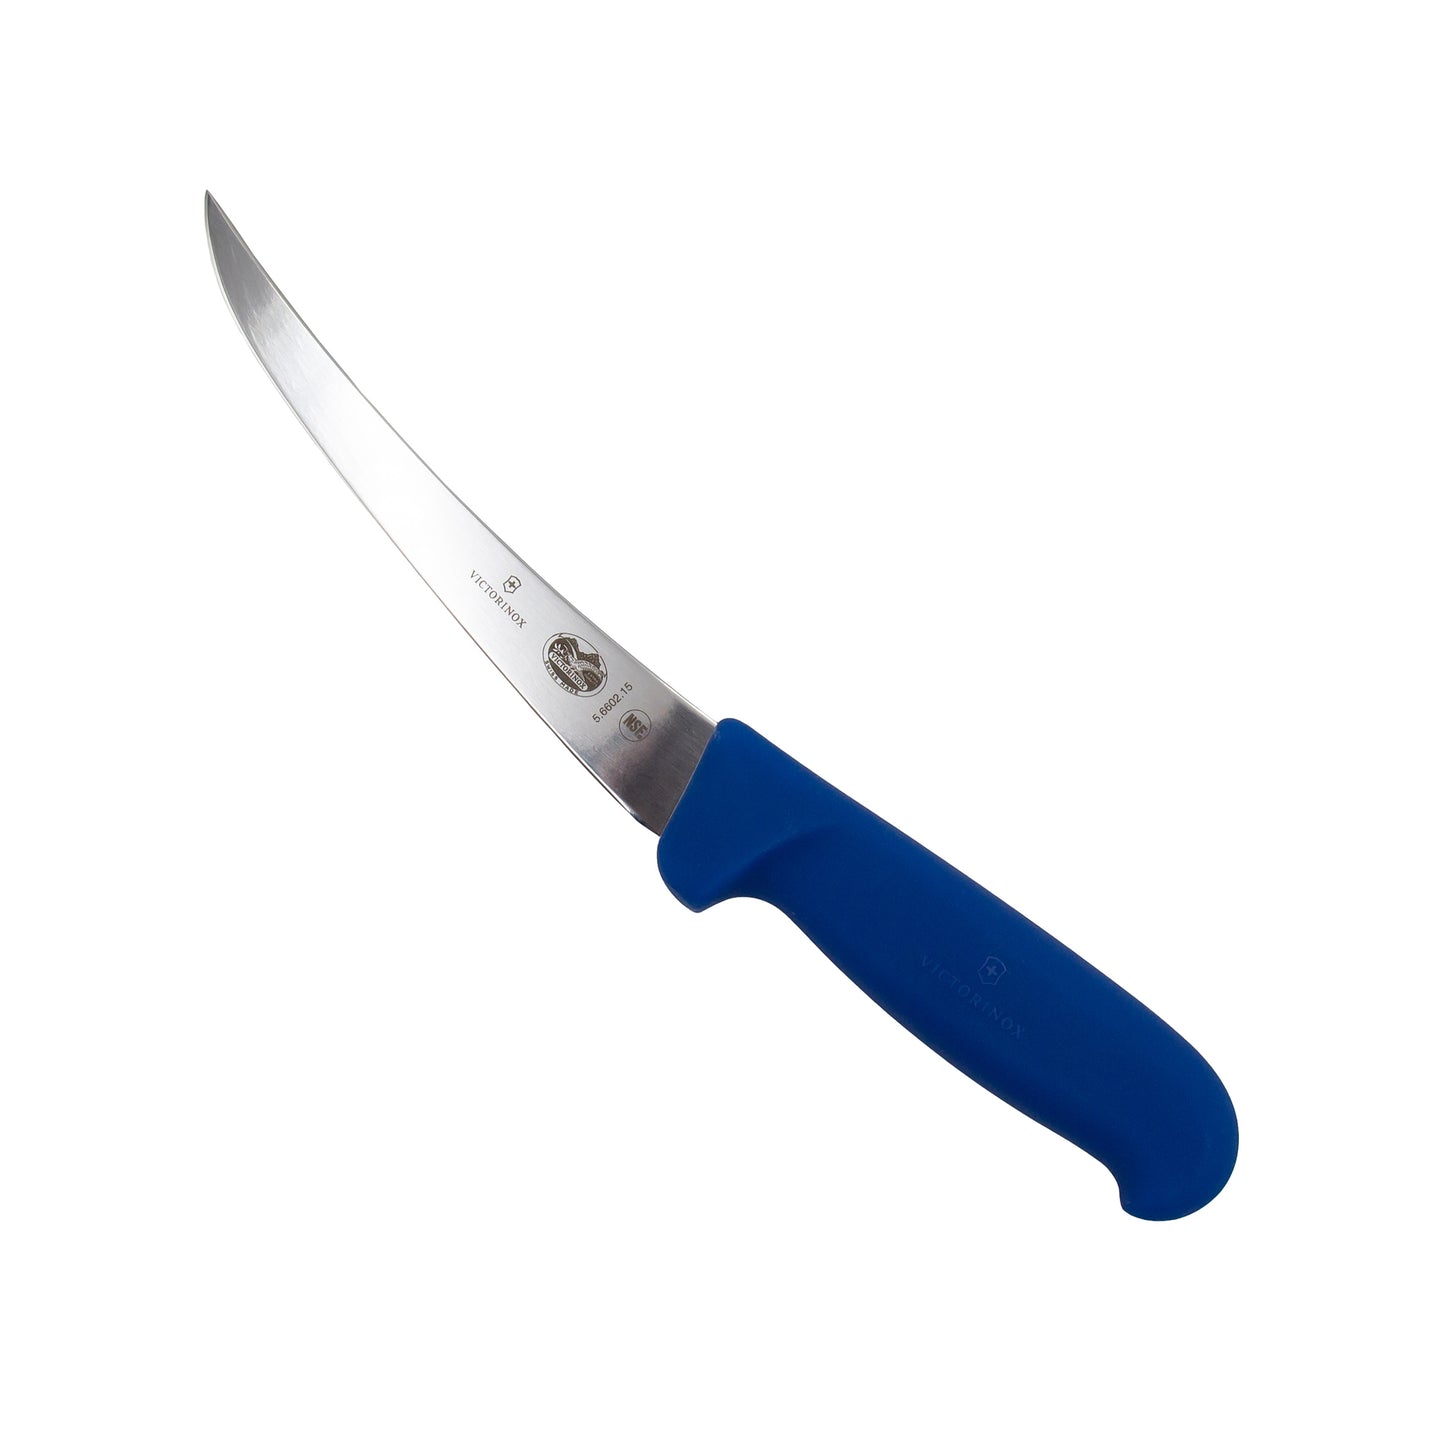 Victorinox boning knife with blue handle